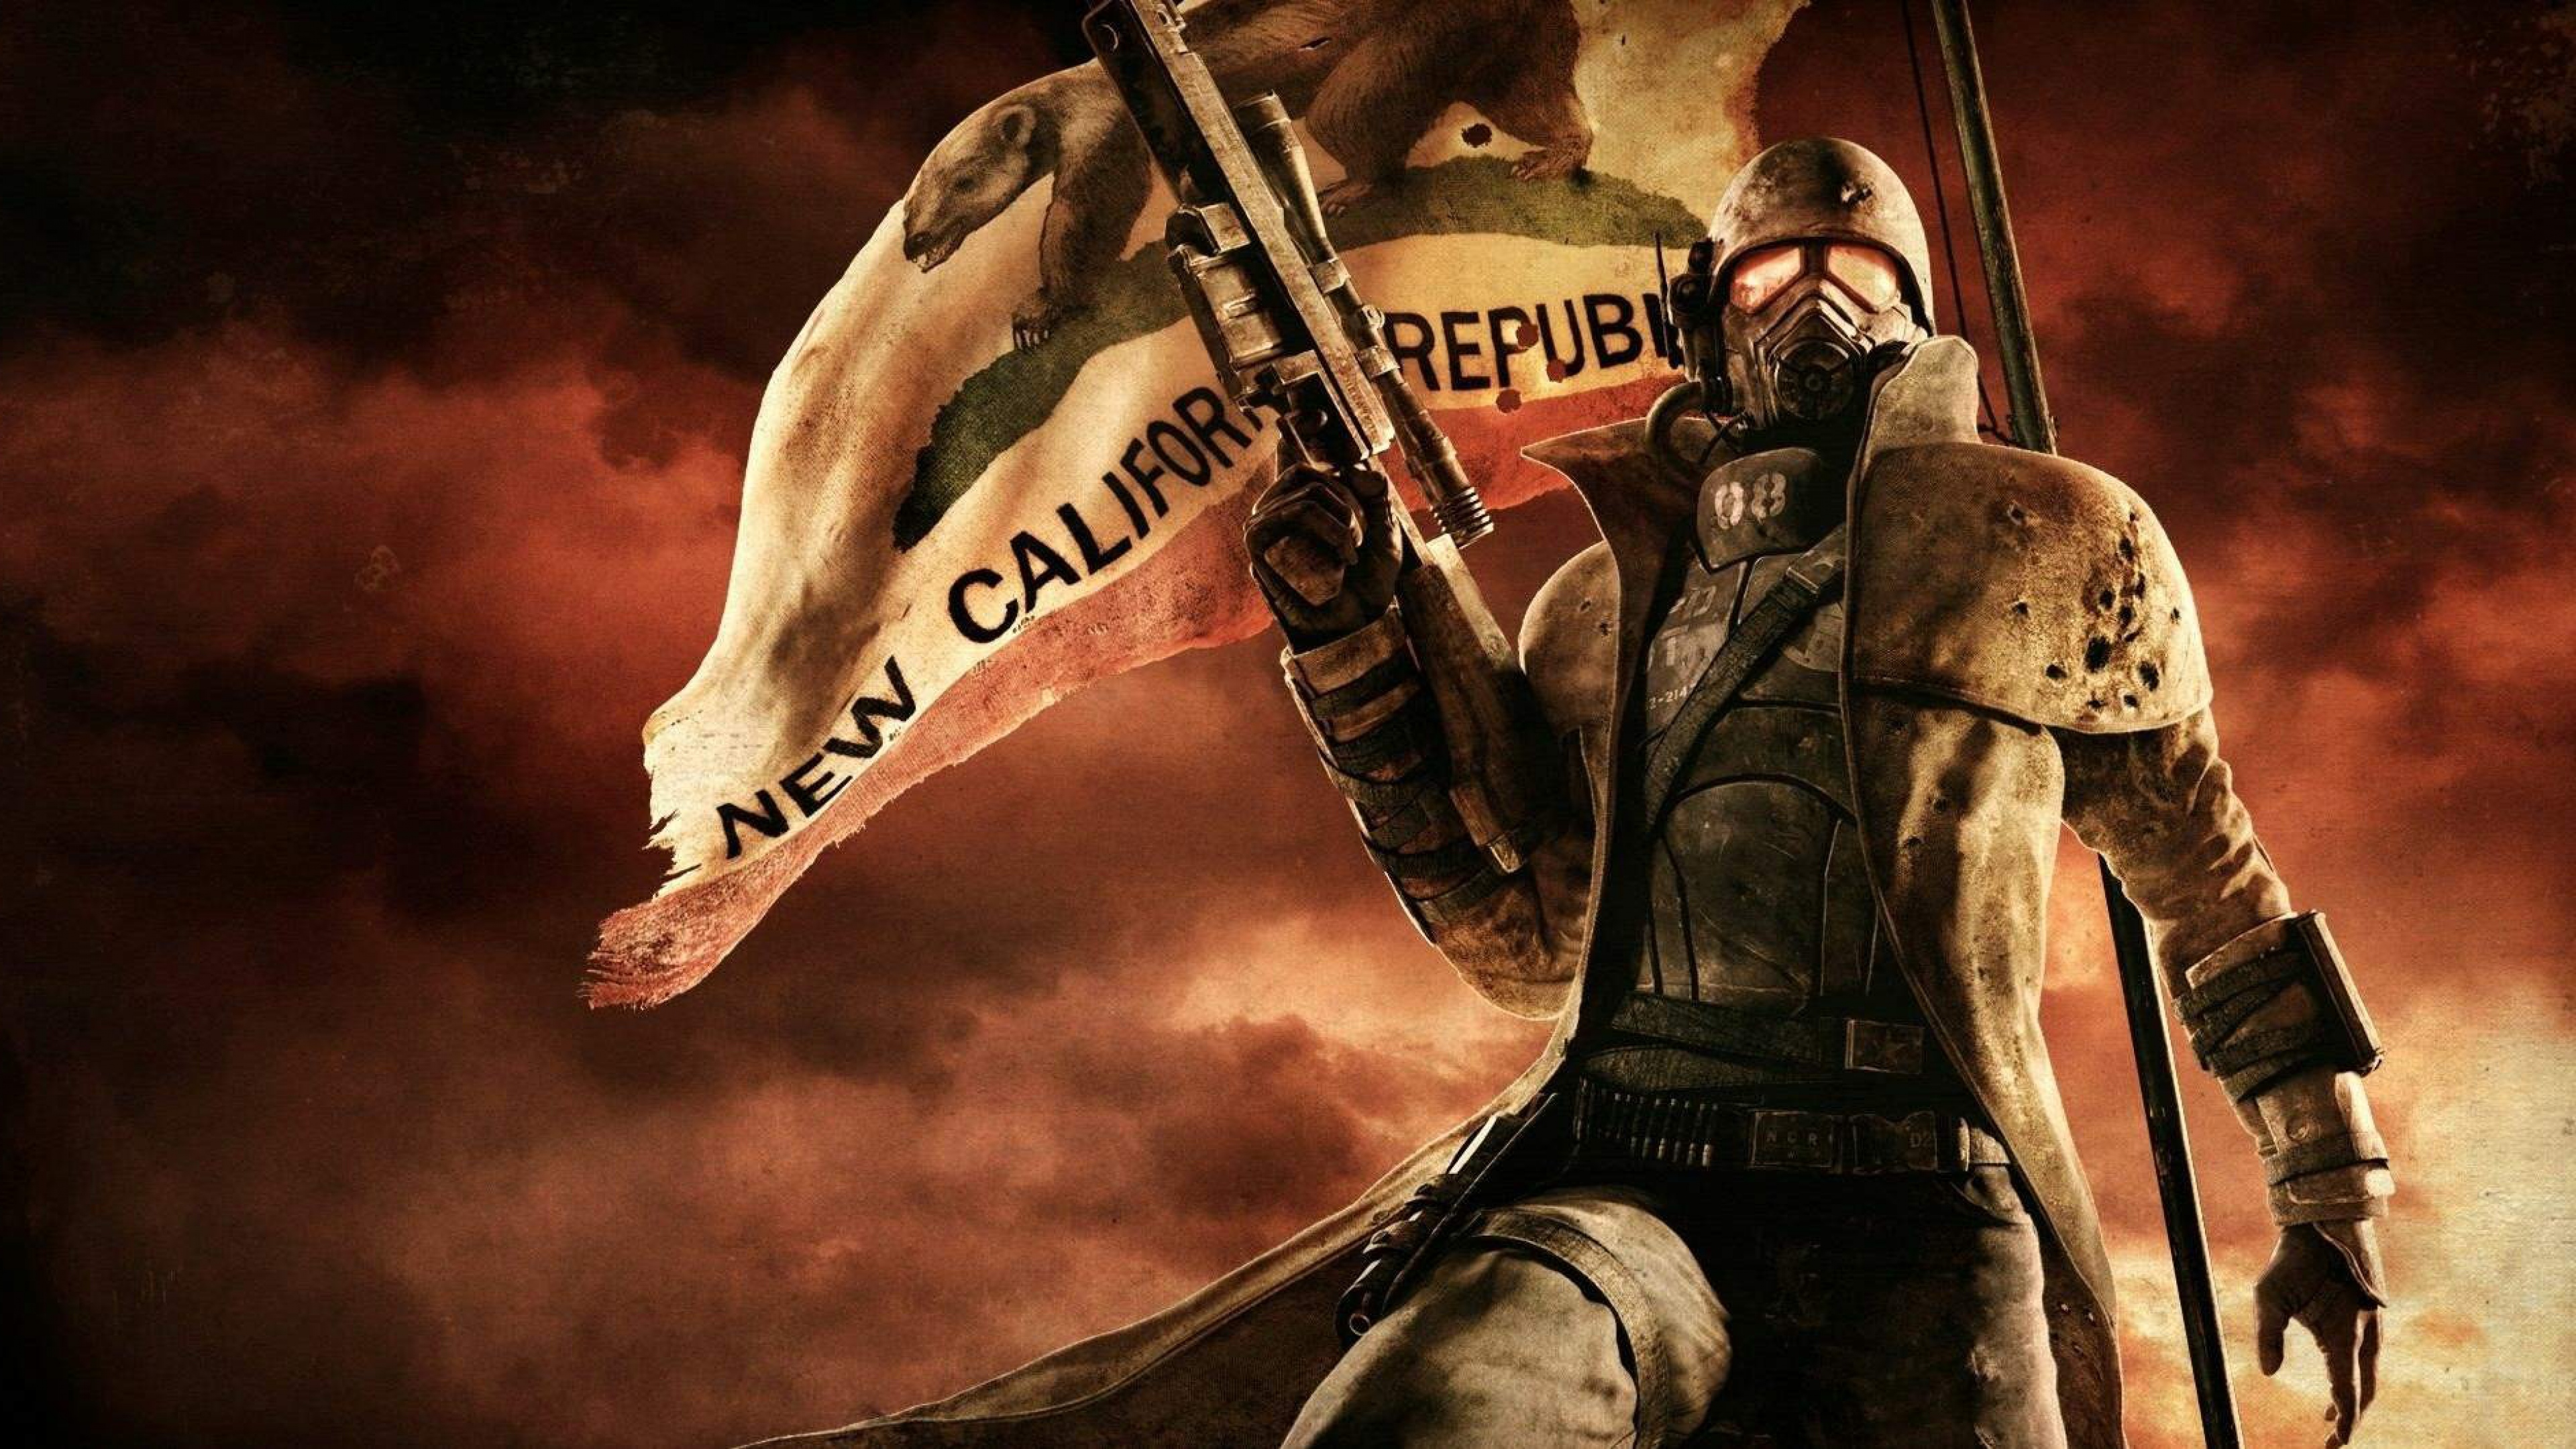 Fallout New Vegas - HD Wallpaper 